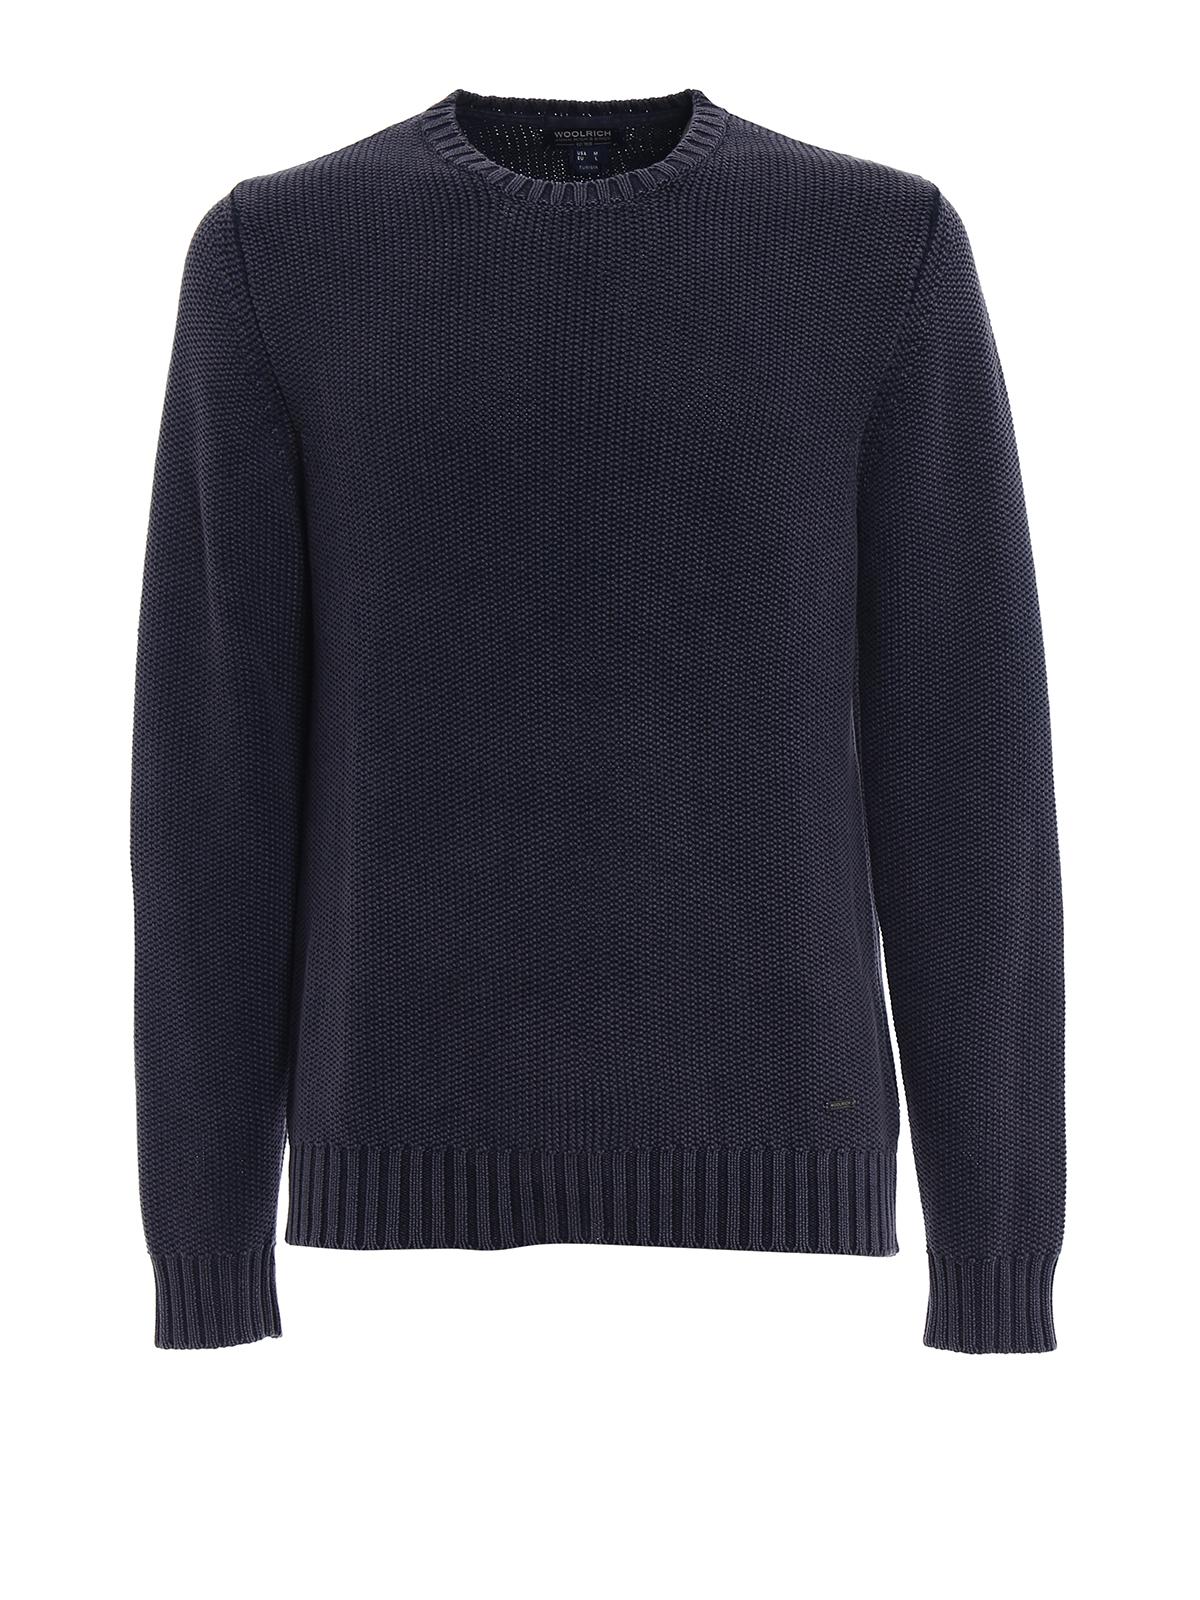 Woolrich Faded Heavy Cotton Sweater in Blue for Men - Lyst